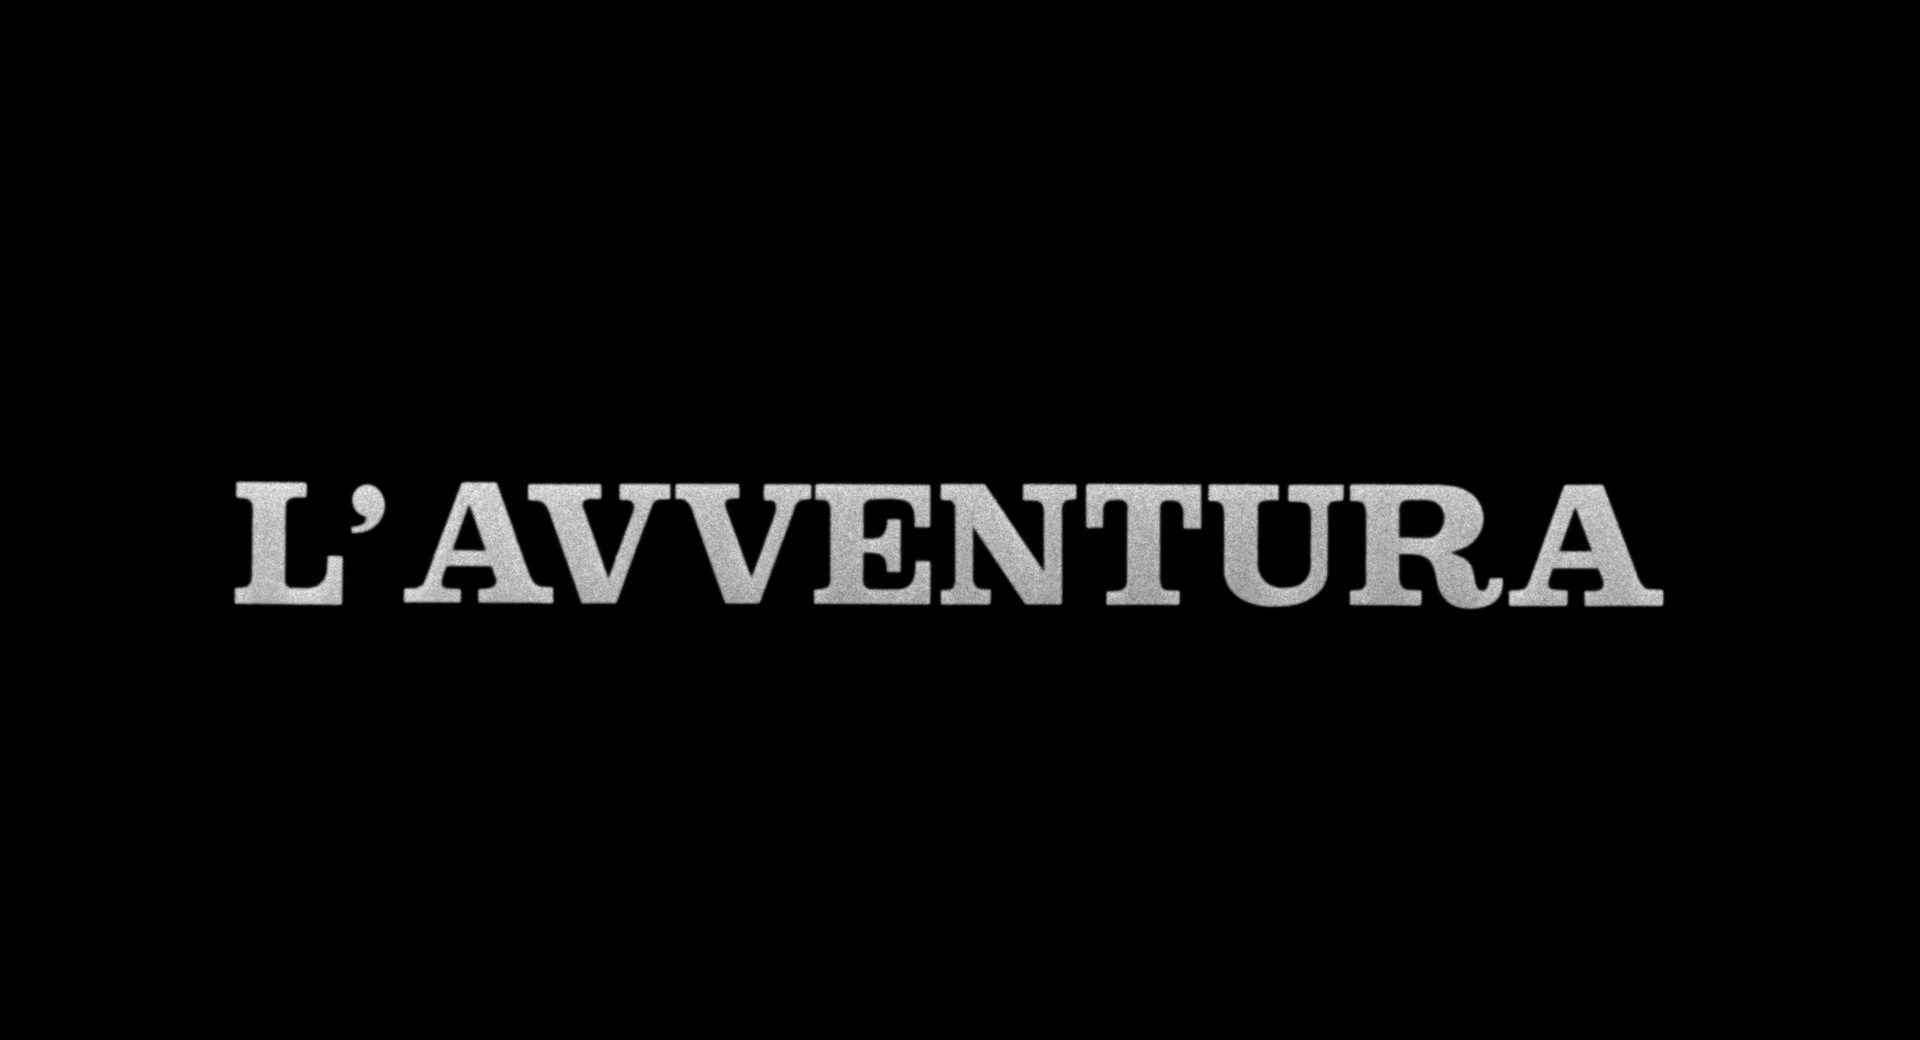 l-avventura-title-sequence-large.jpg